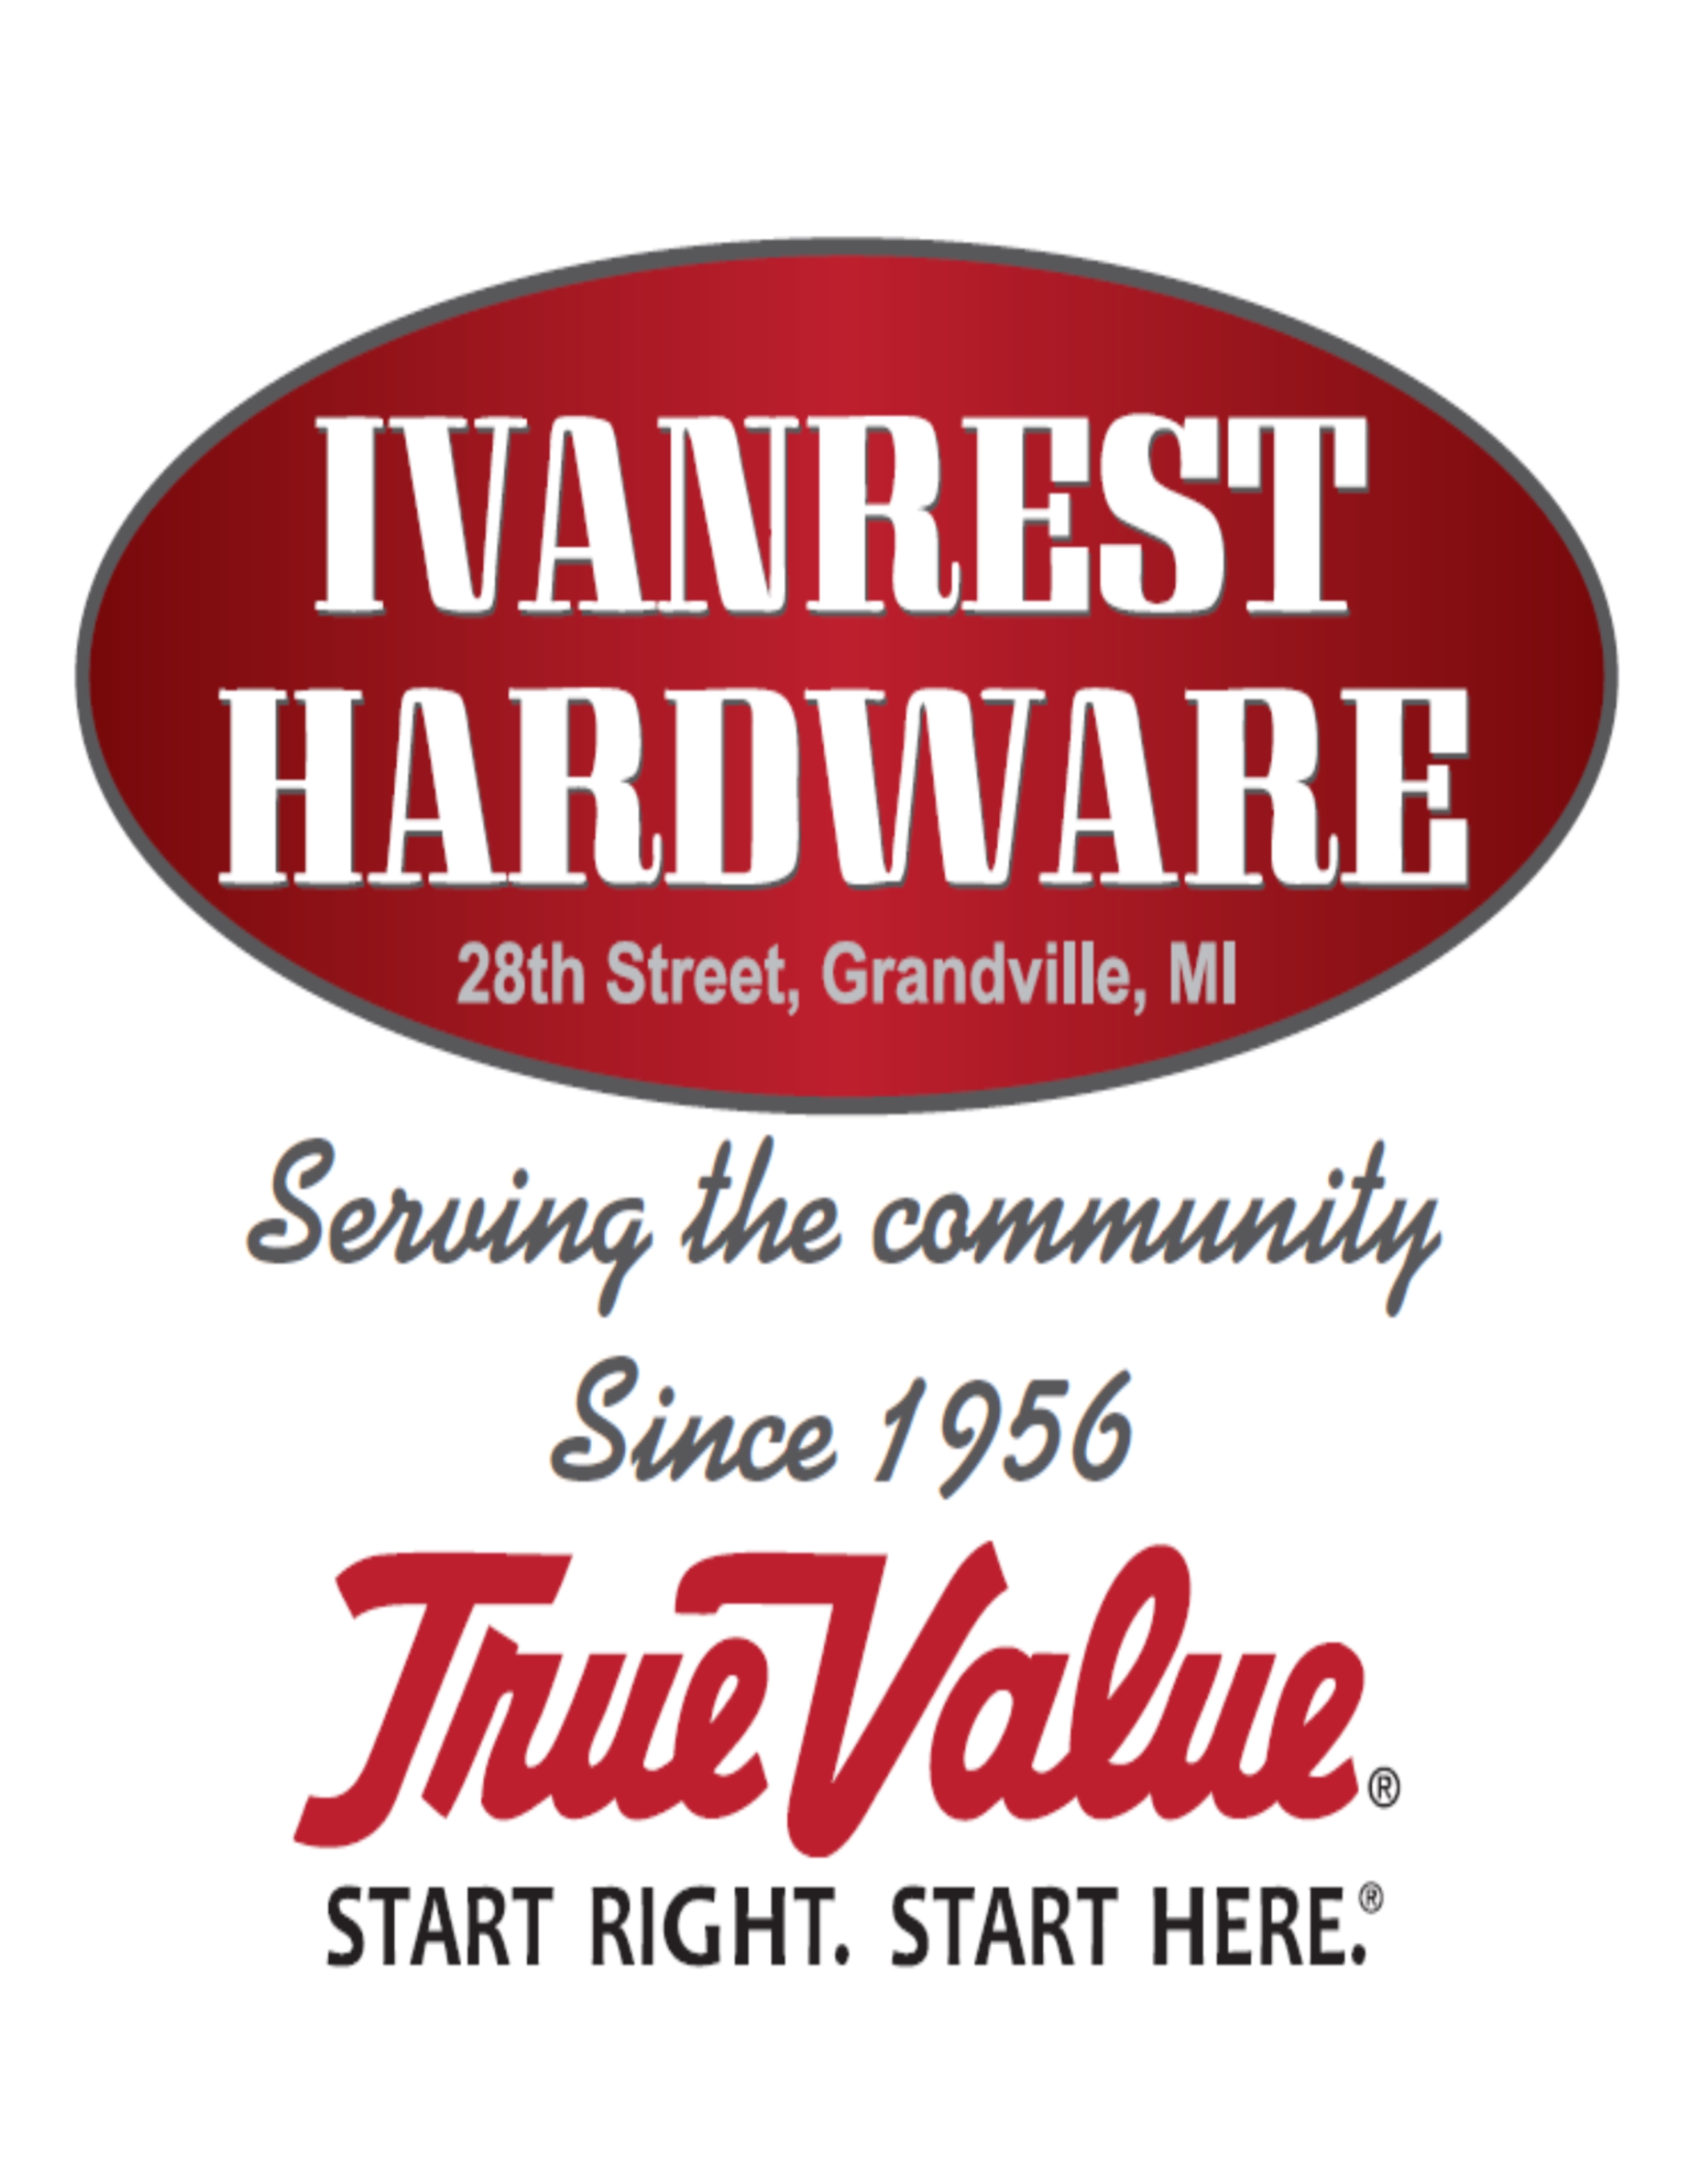 <img src="Ivanrest Hardware logo Grandville Michigan.jpg"alt="Ivanrest Hardware logo" title="Ivanrest Hardware logo"/>.